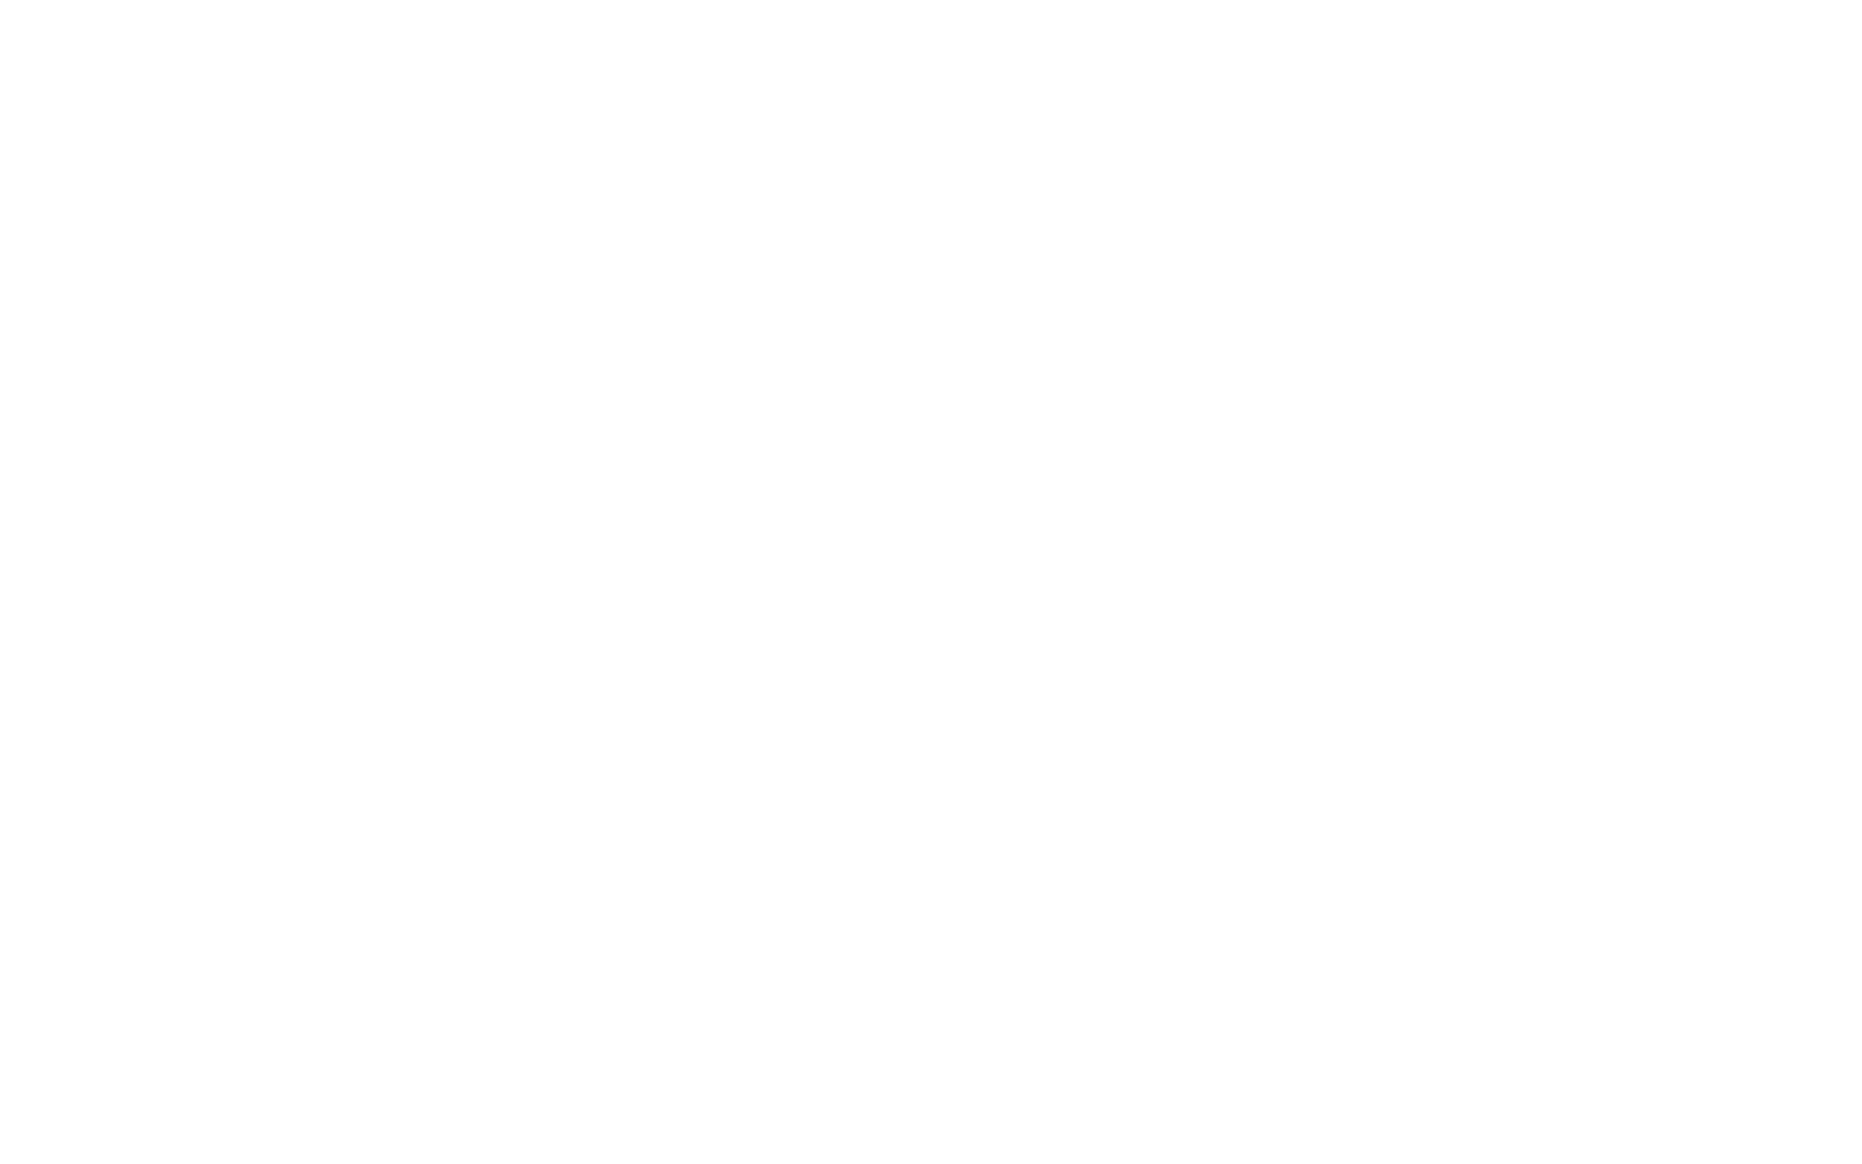 scroll media